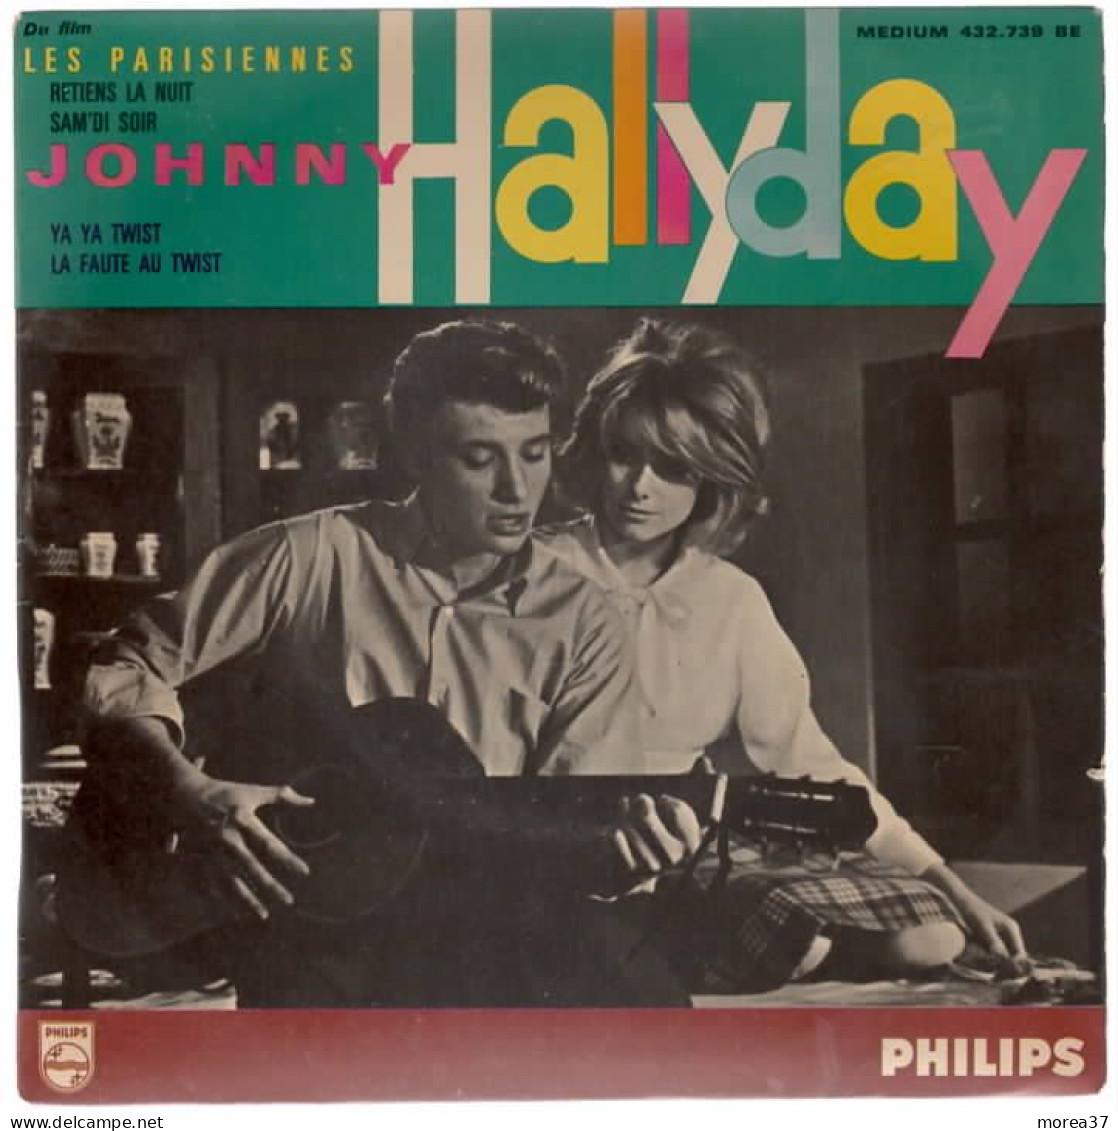 JOHNNY HALLYDAY  Retiens La Nuit    Du Film LES PARISIENNES    PHILIPS  432 .739 BE - Other - French Music